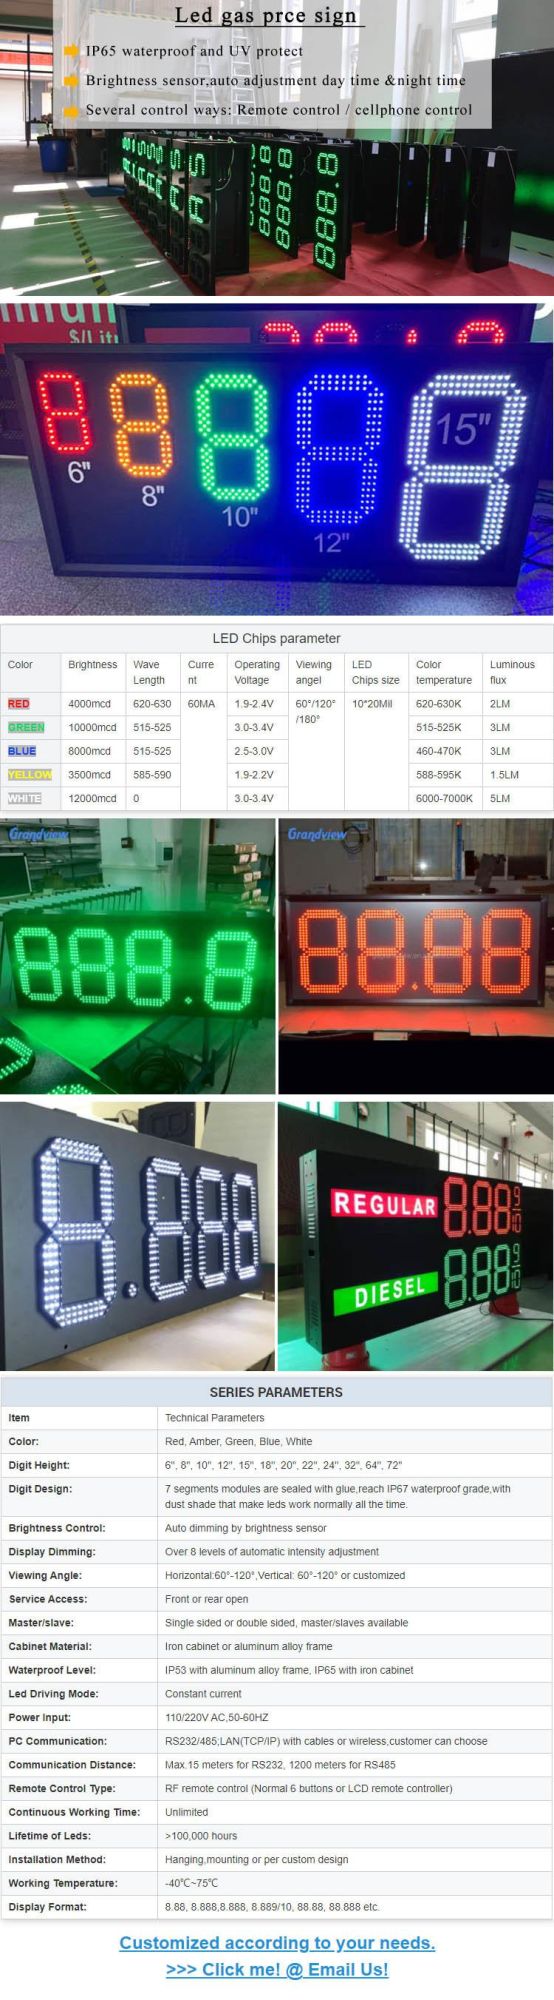 Remote Control 4 Digital Number 8.888 7 Segment LED Gas Price Sign